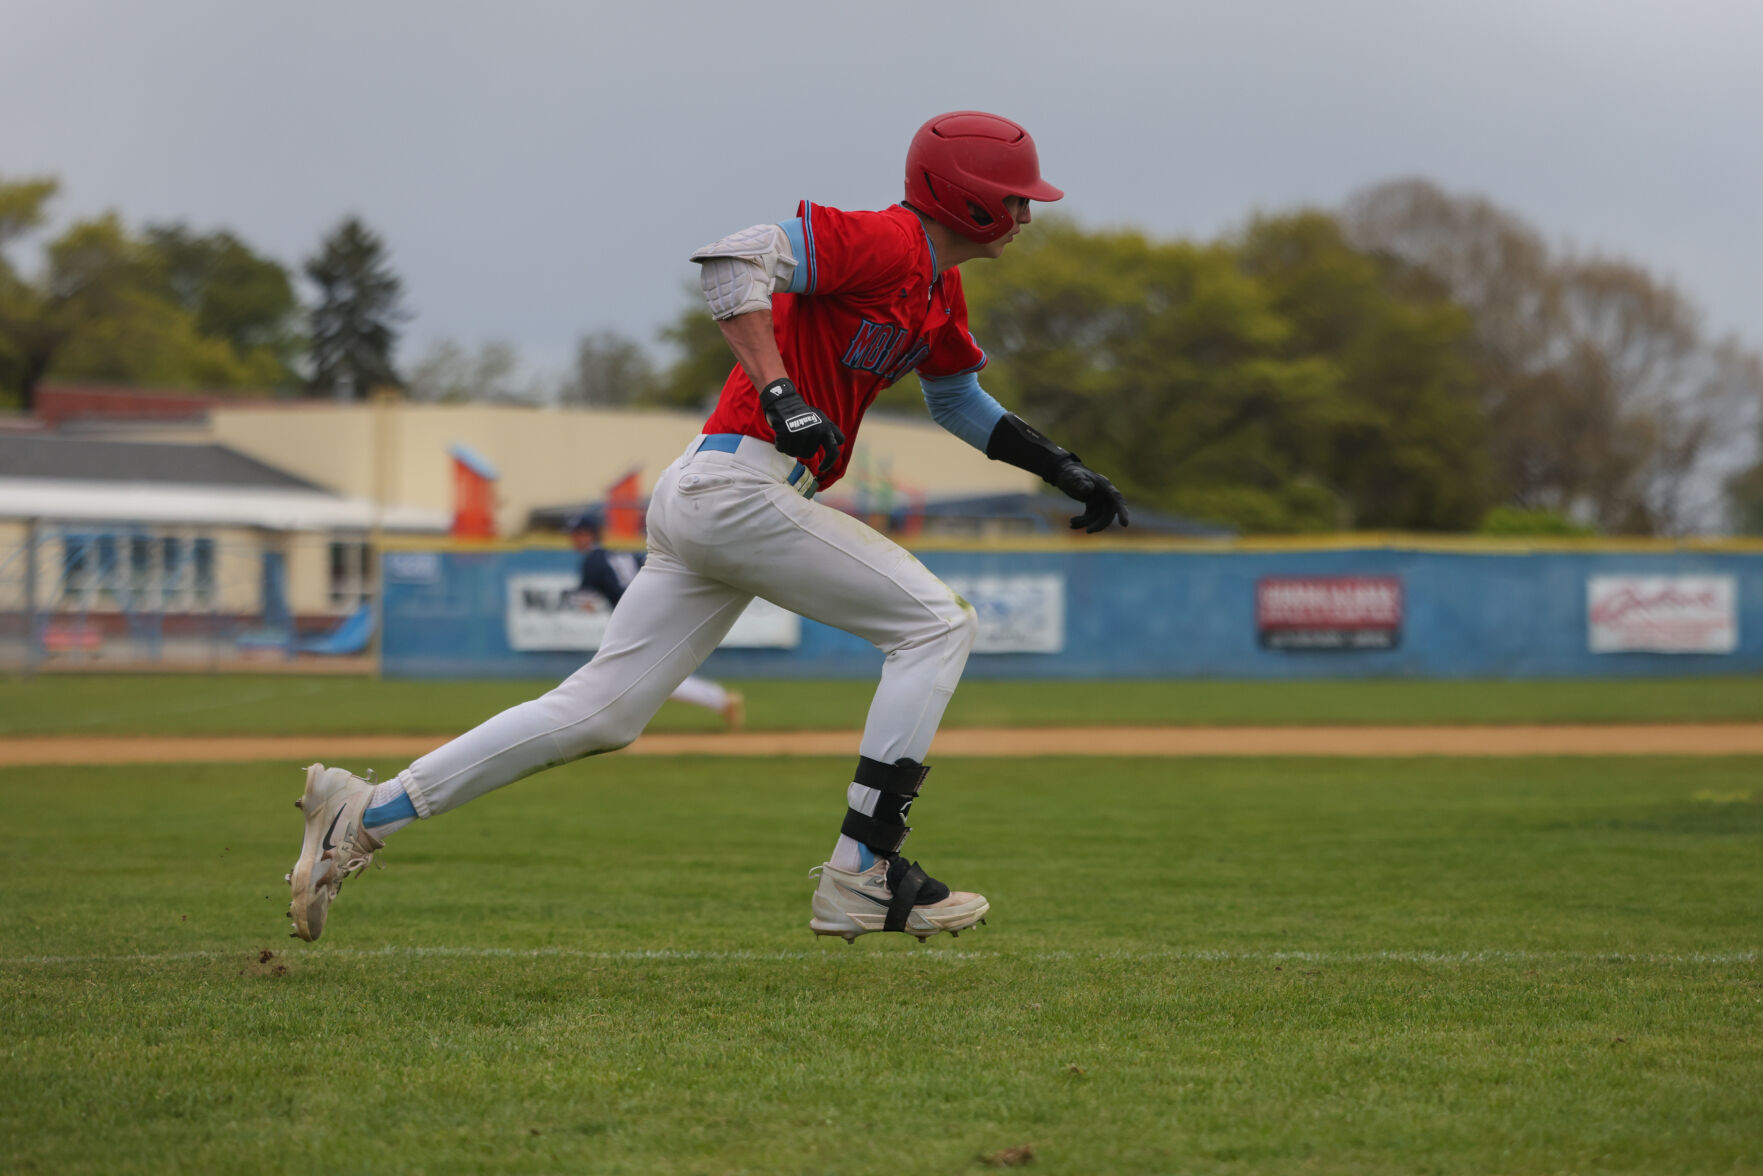 High School Baseball Recap: Mark Morris Dominates heritage, Skyview Games